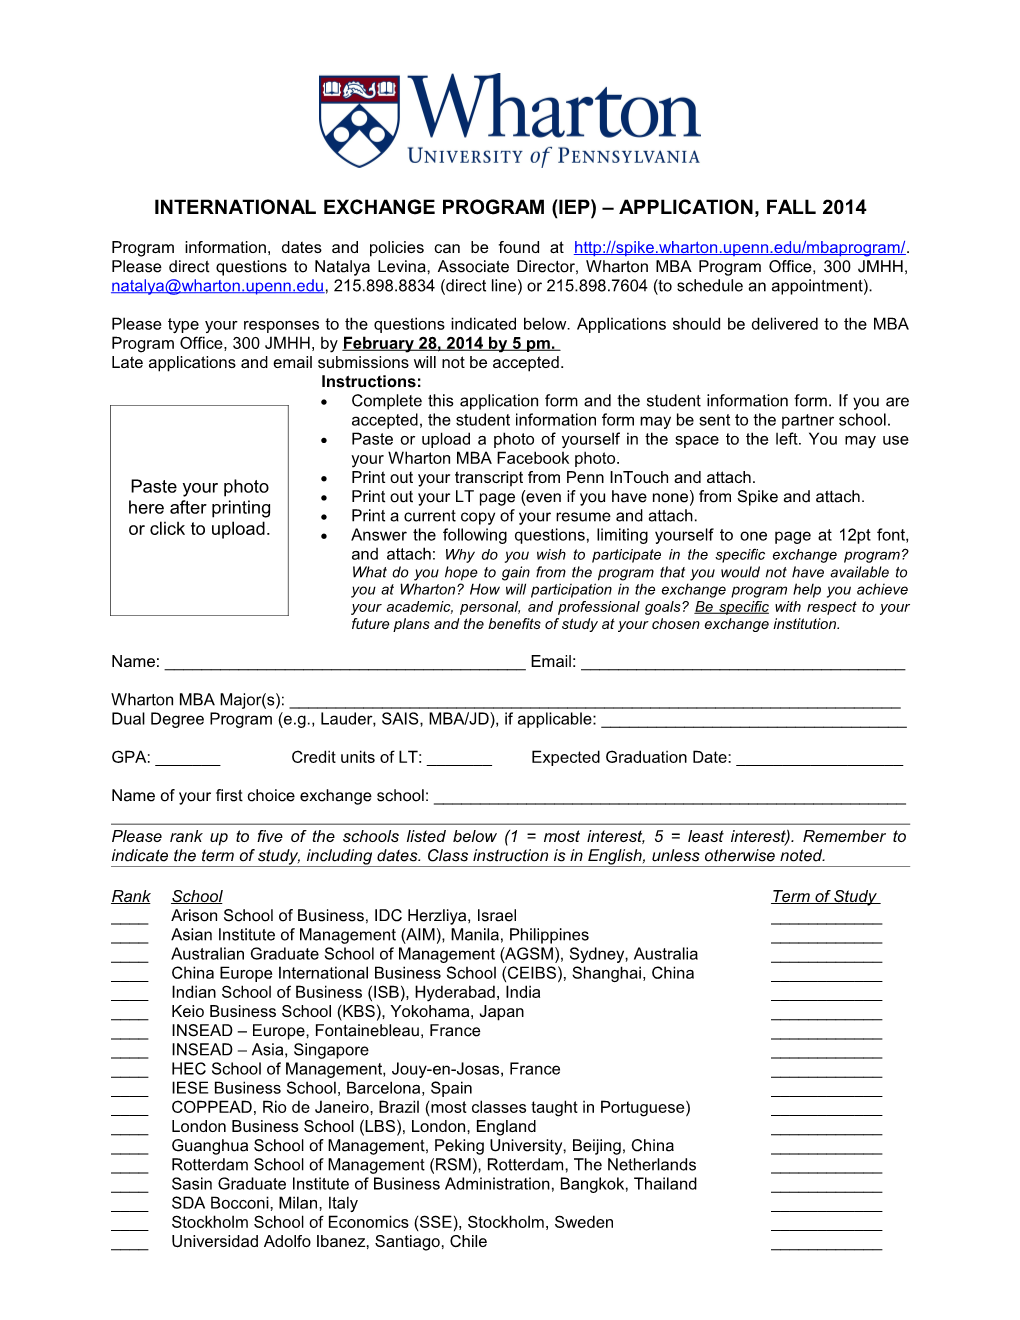 International Exchange Program (Iep) Application, Fall 2014